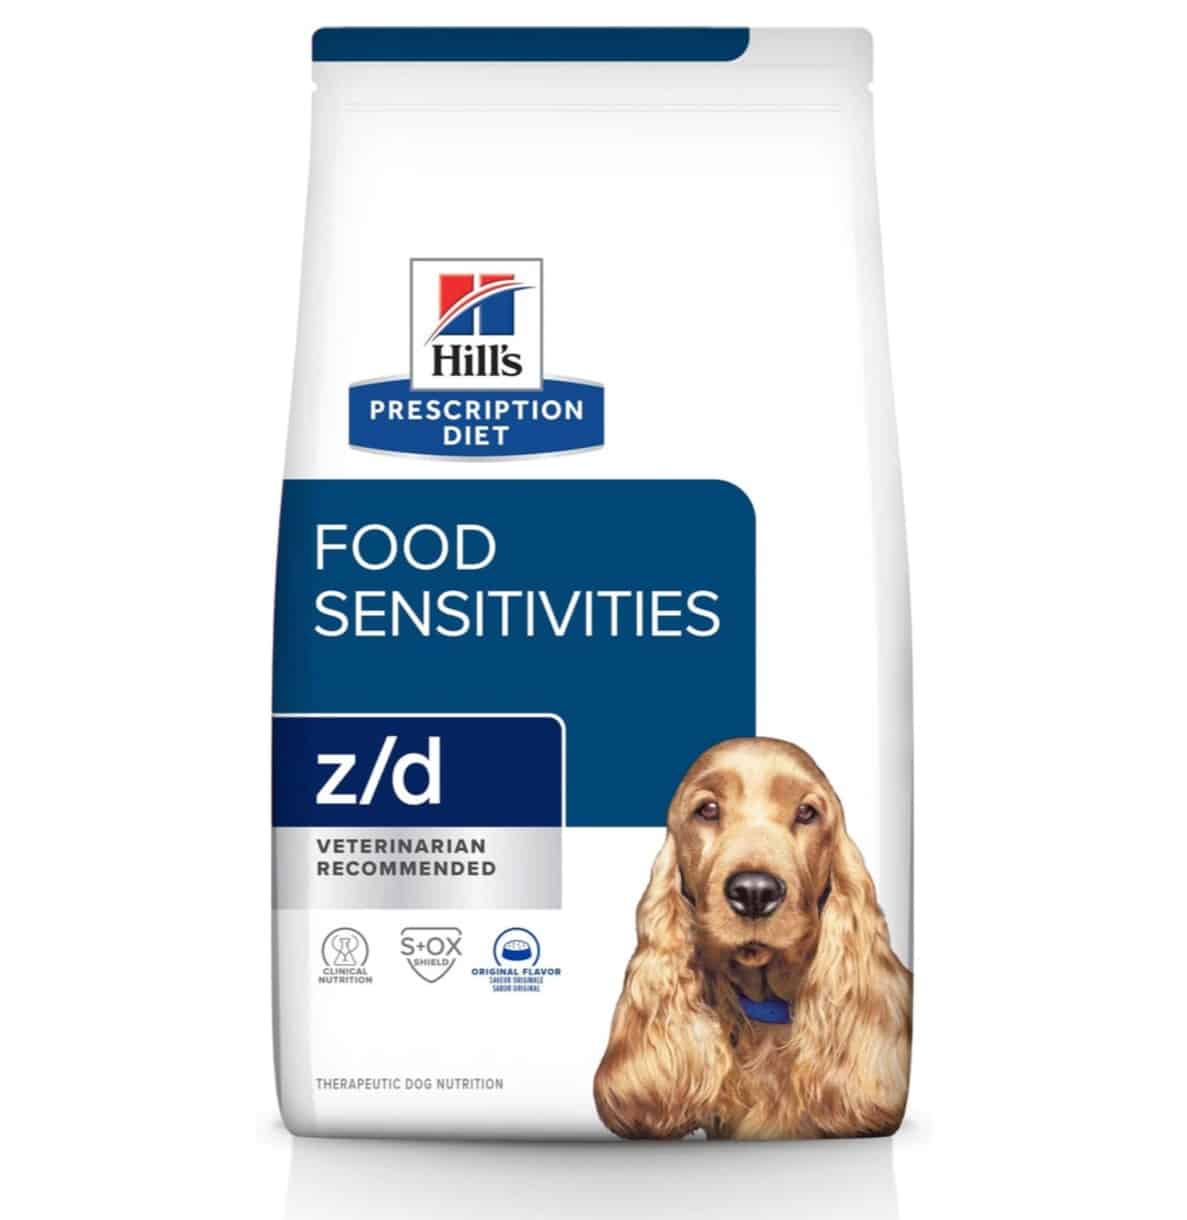 Hill's Prescription Diet zd SkinFood Sensitivities Original Flavor Dry Dog Food